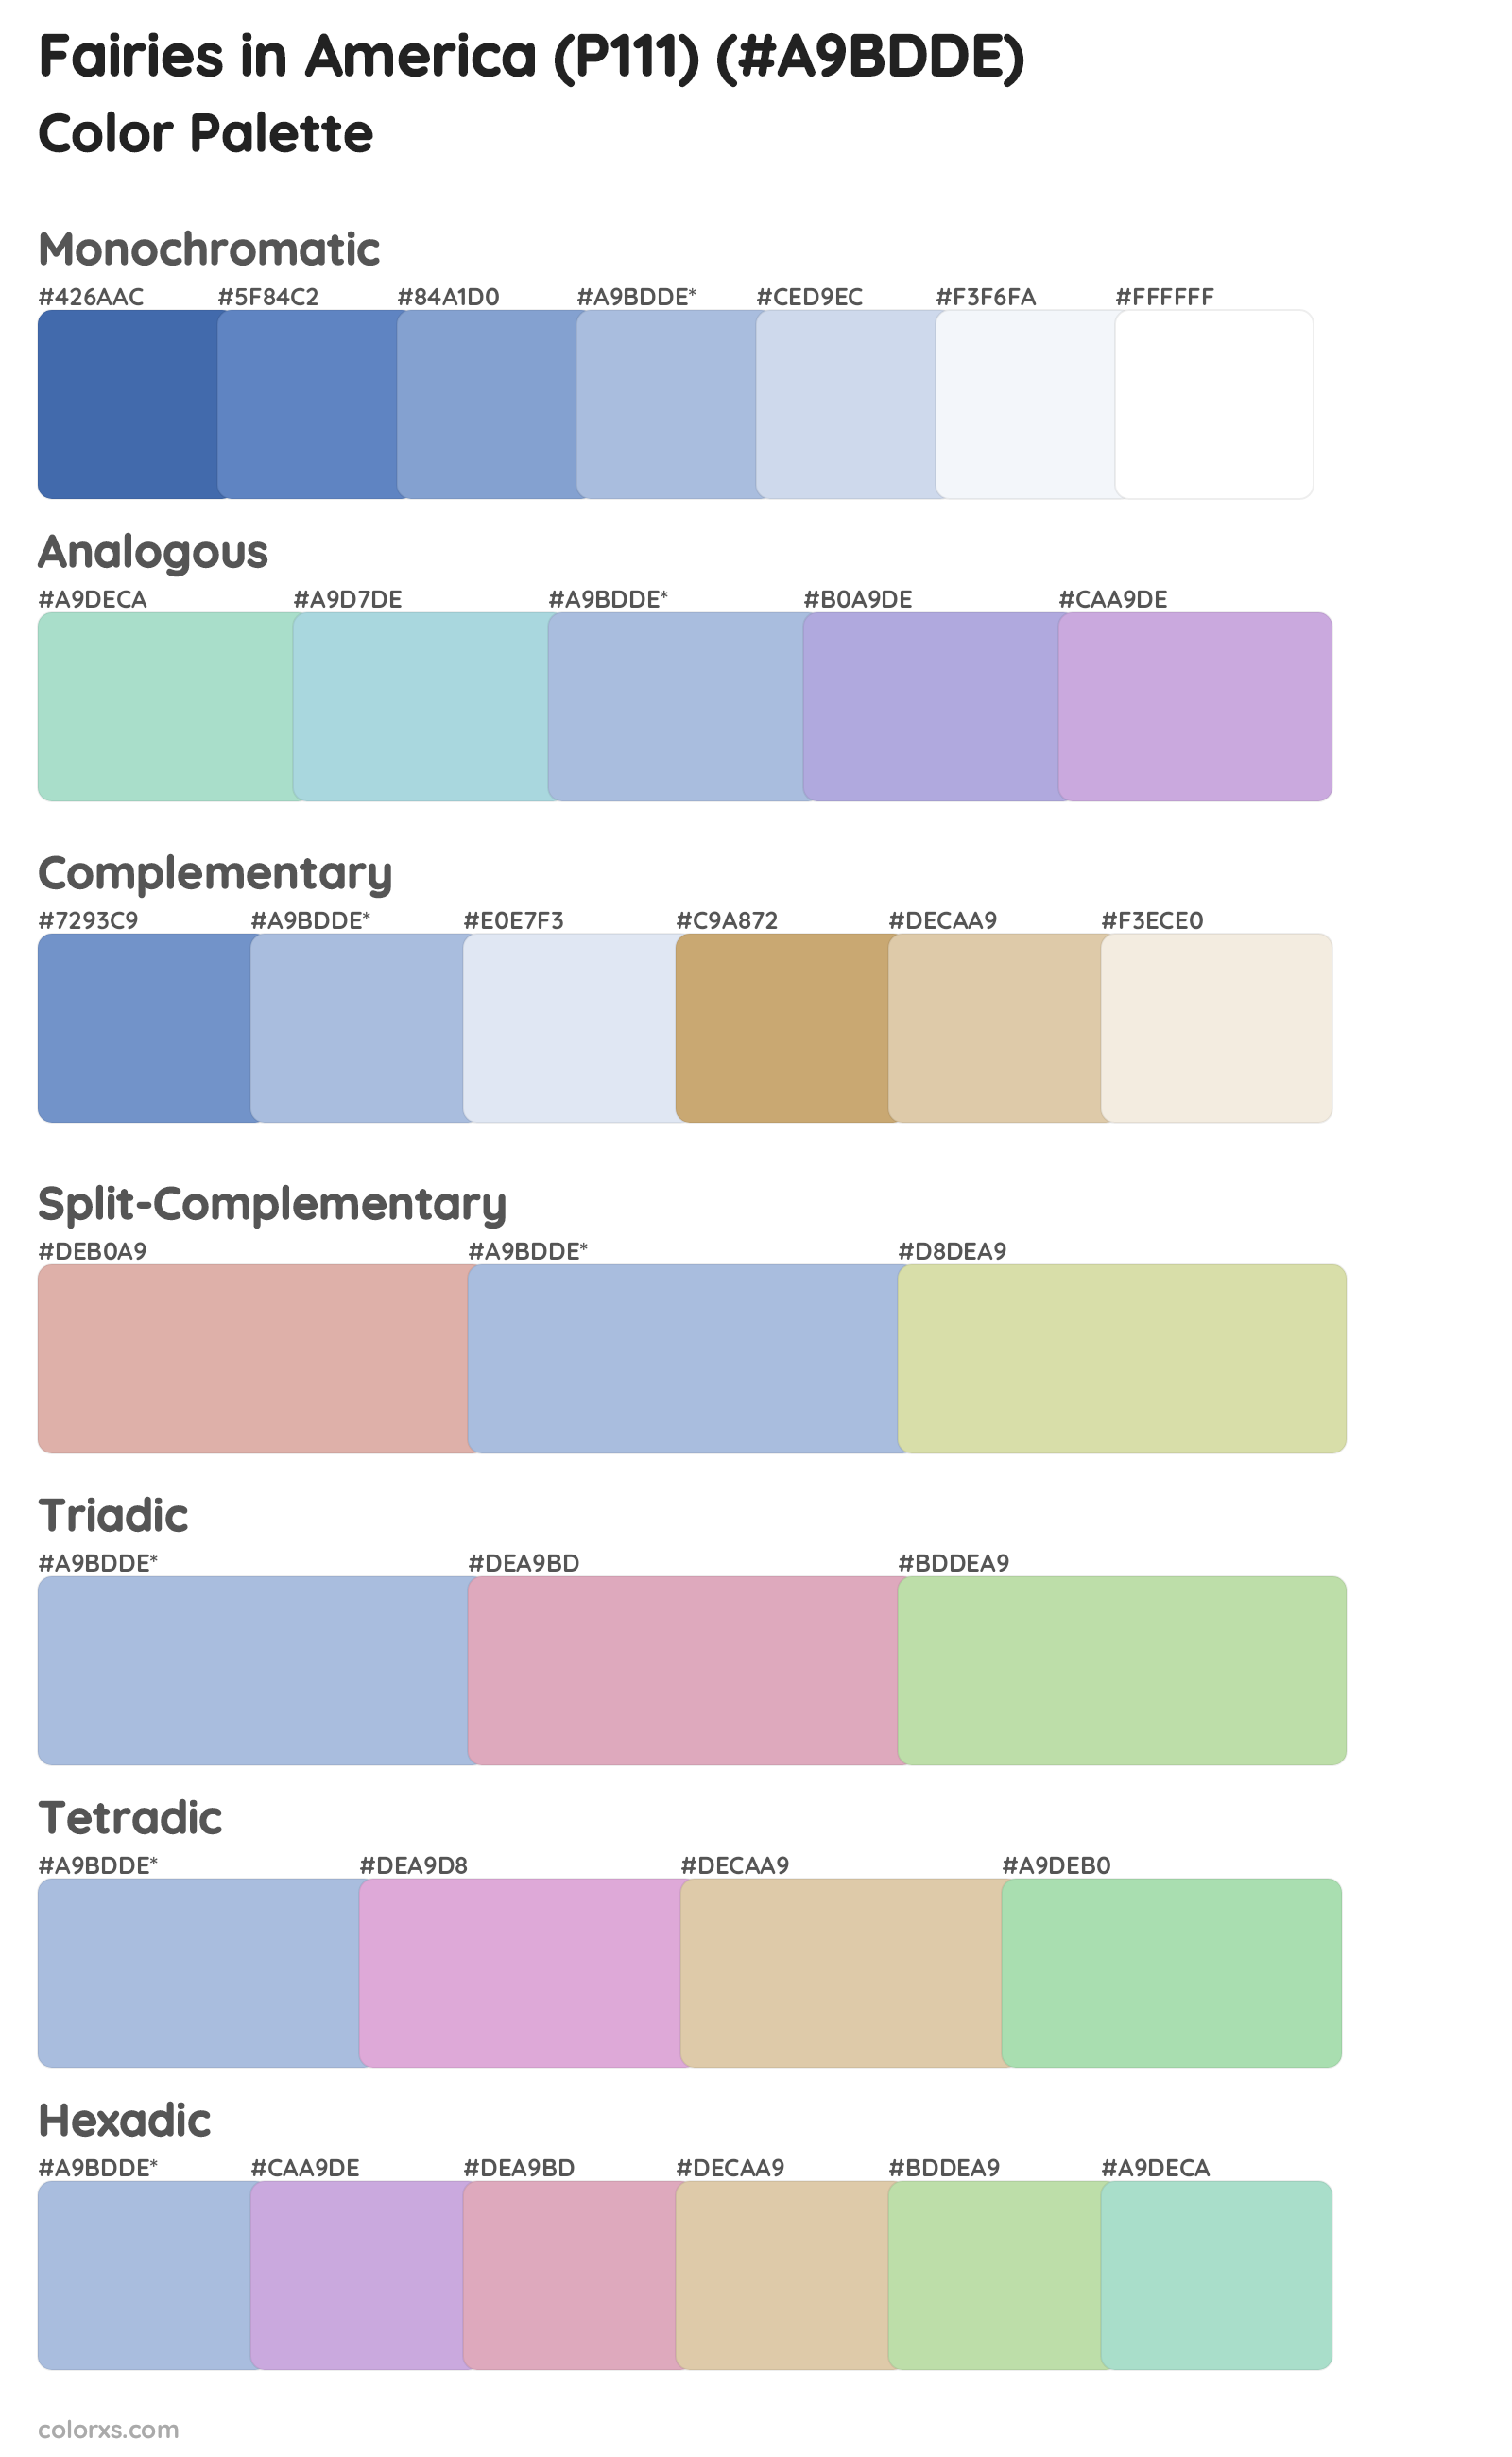 Fairies in America (P111) Color Scheme Palettes